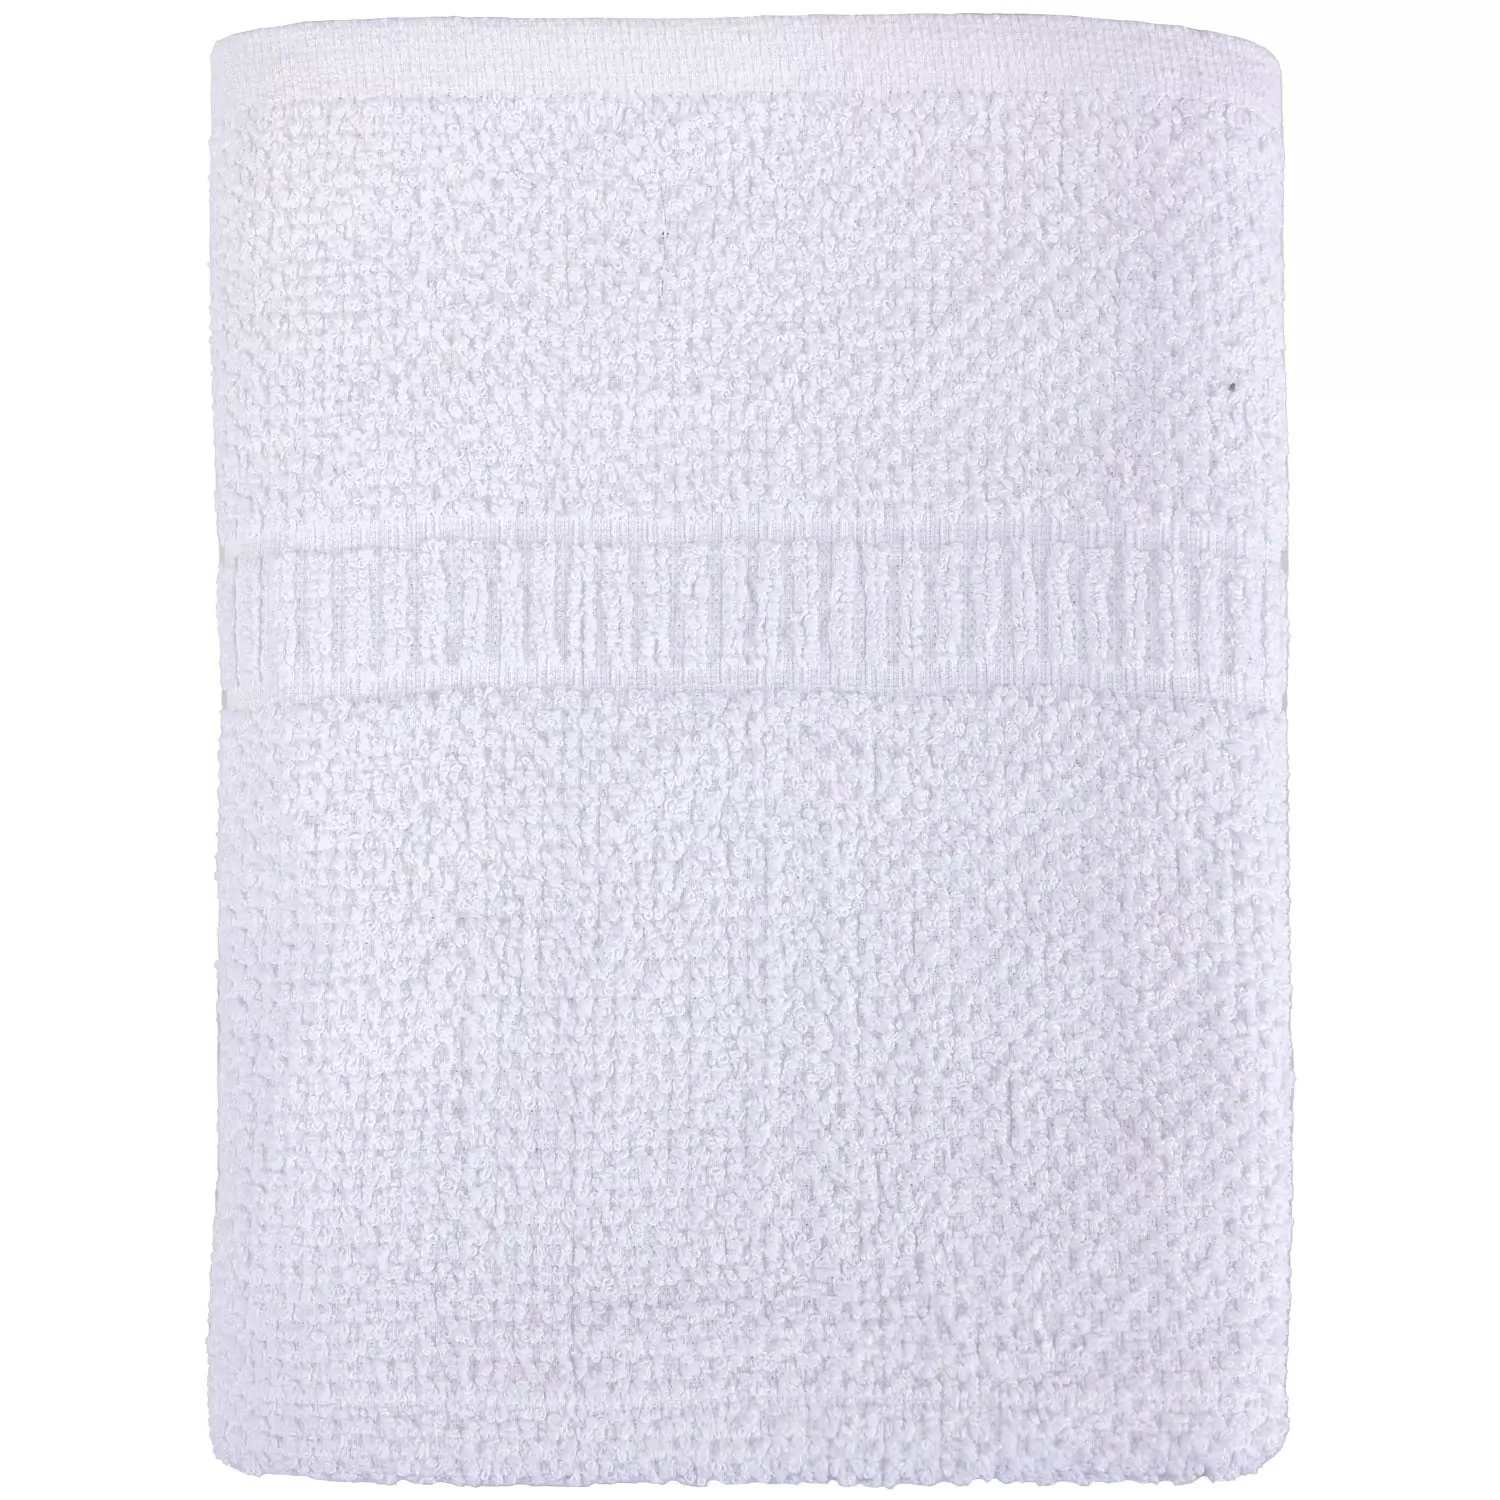 Bath towel, 27"x50", white